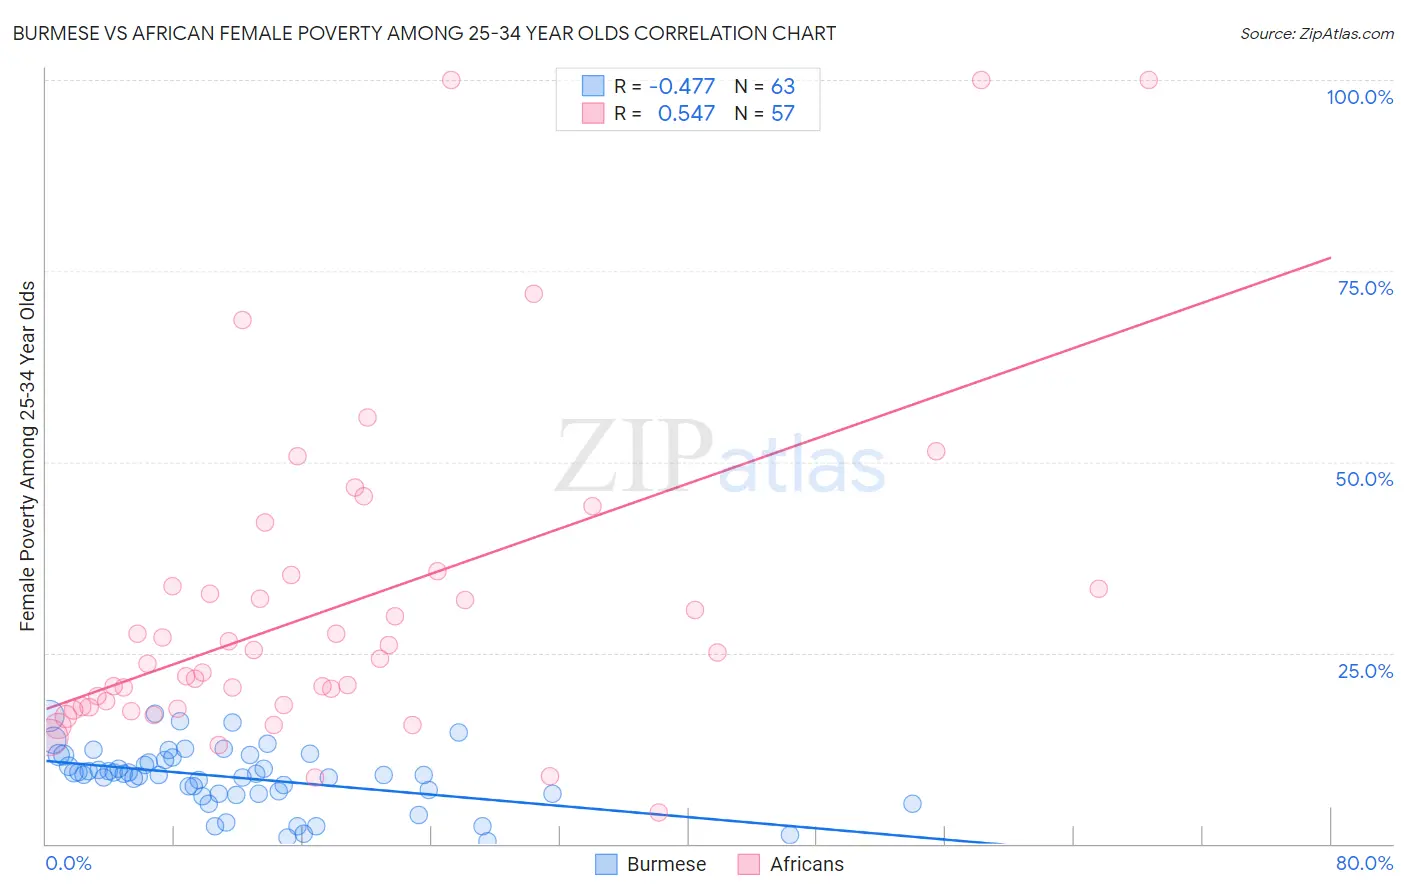 Burmese vs African Female Poverty Among 25-34 Year Olds